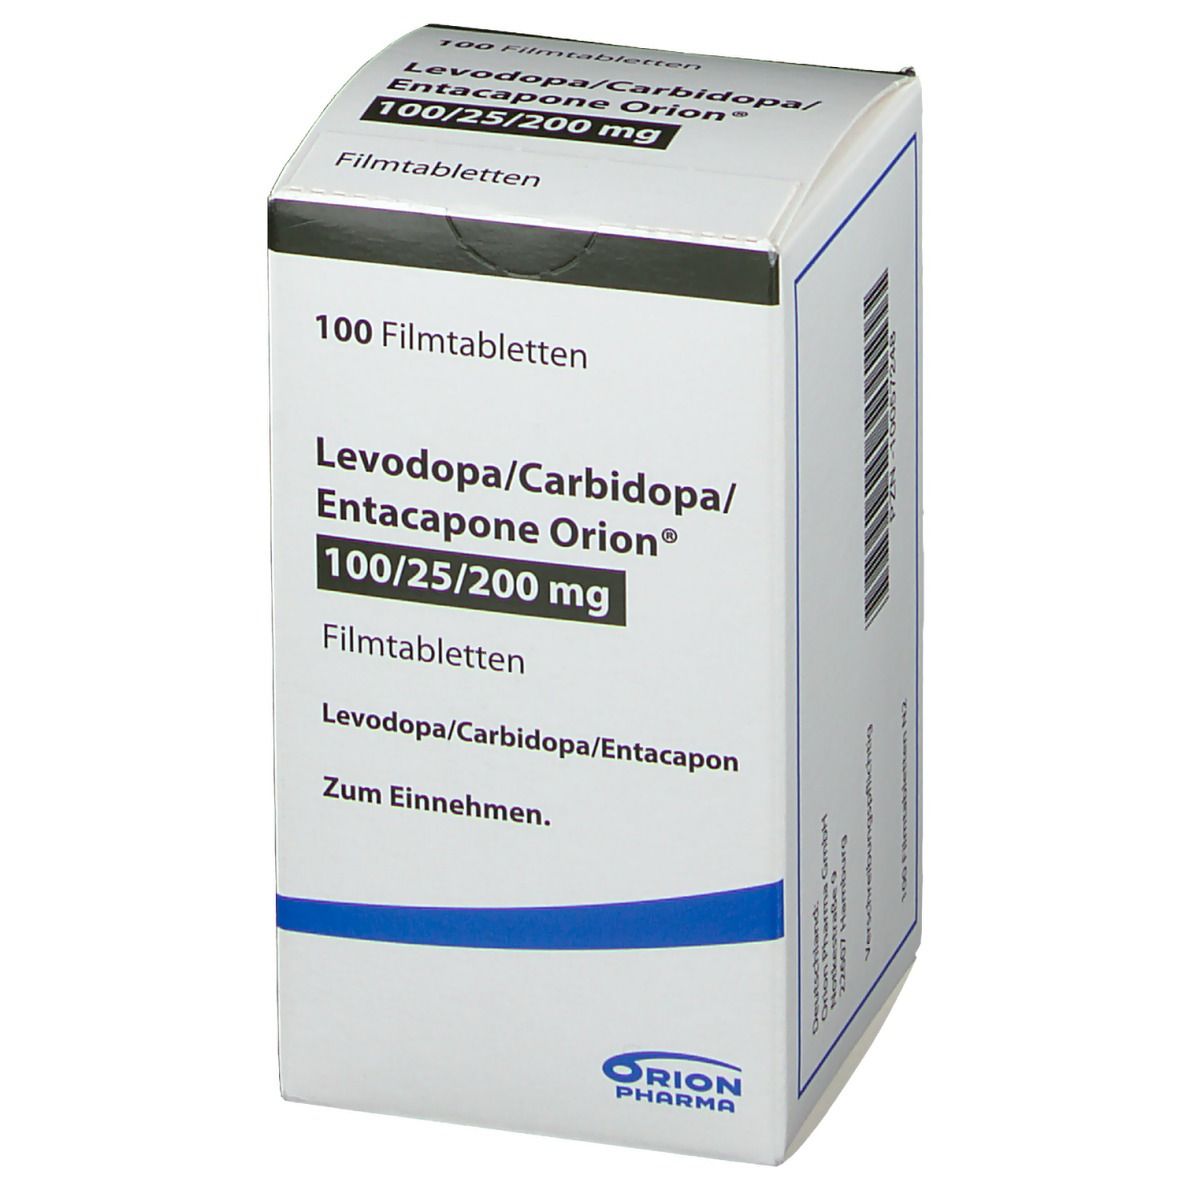 LEVODOPA/Carbidopa/Entacapone Orion 100 mg/25 mg/200 mg